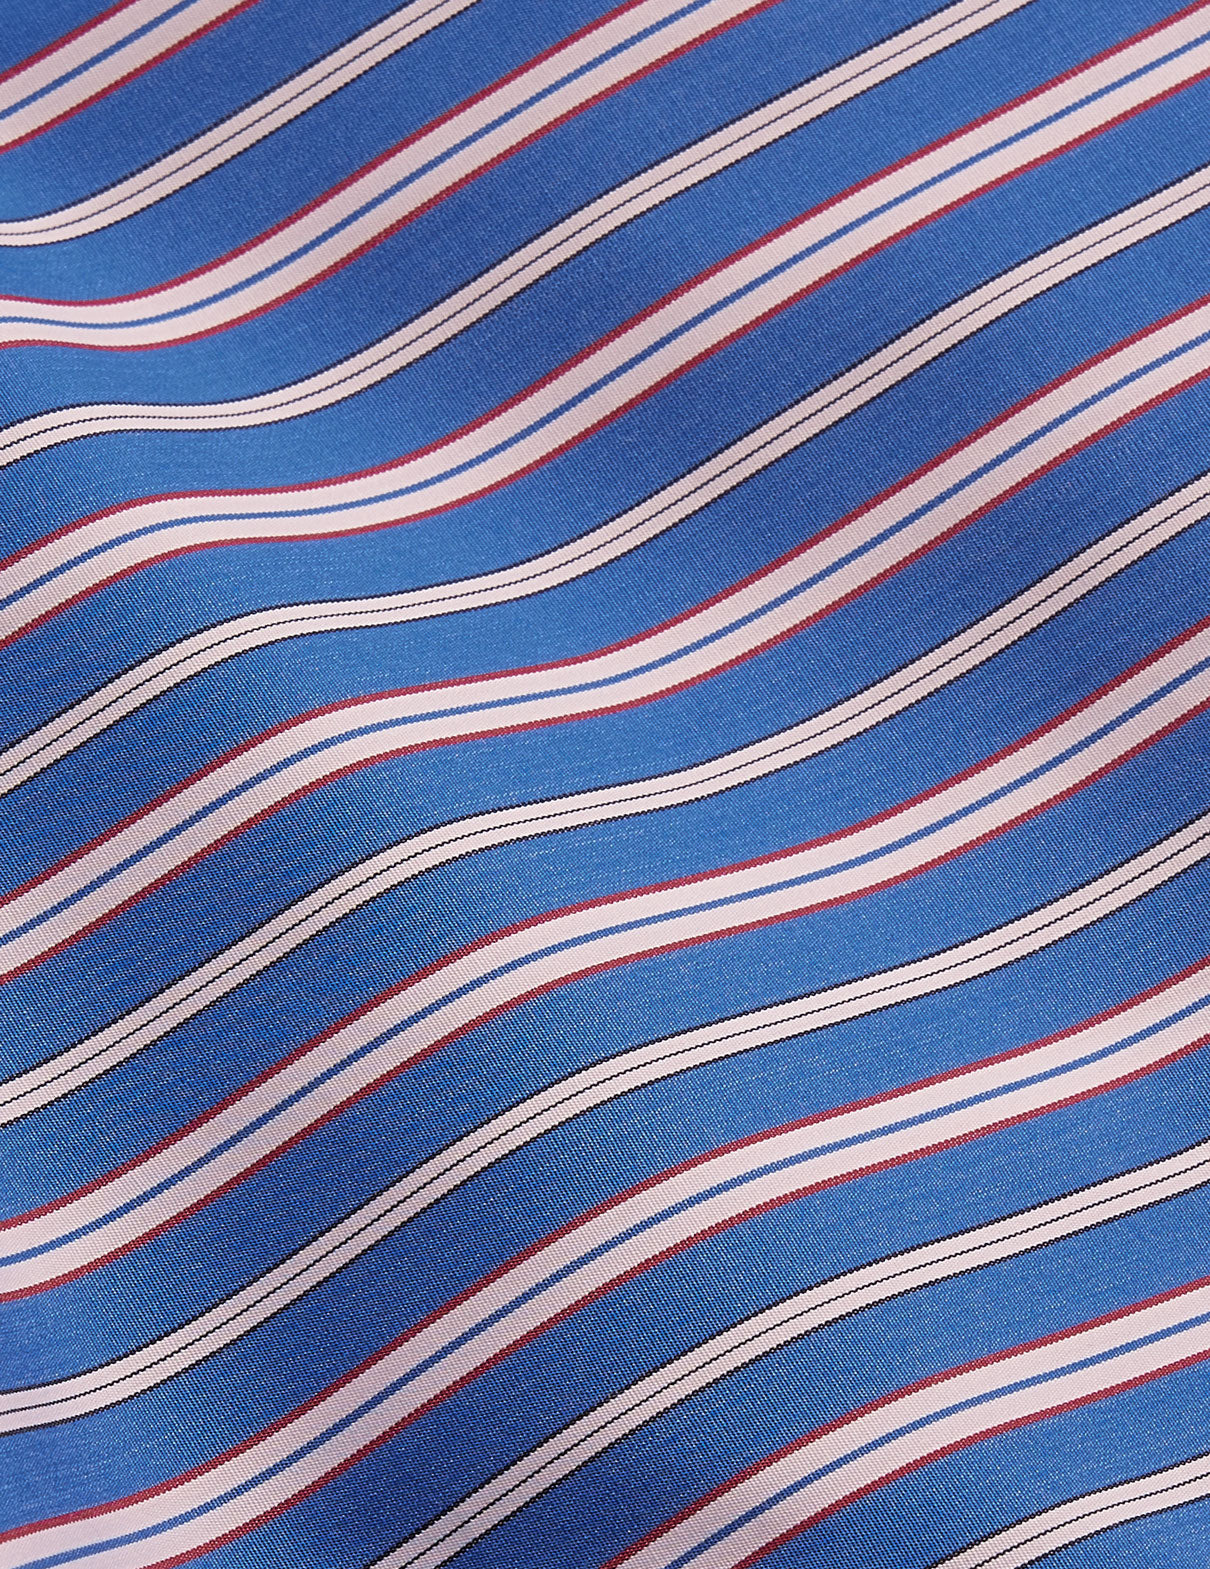 Chemise semi-ajustée rayée bleue - Popeline - Col Américain